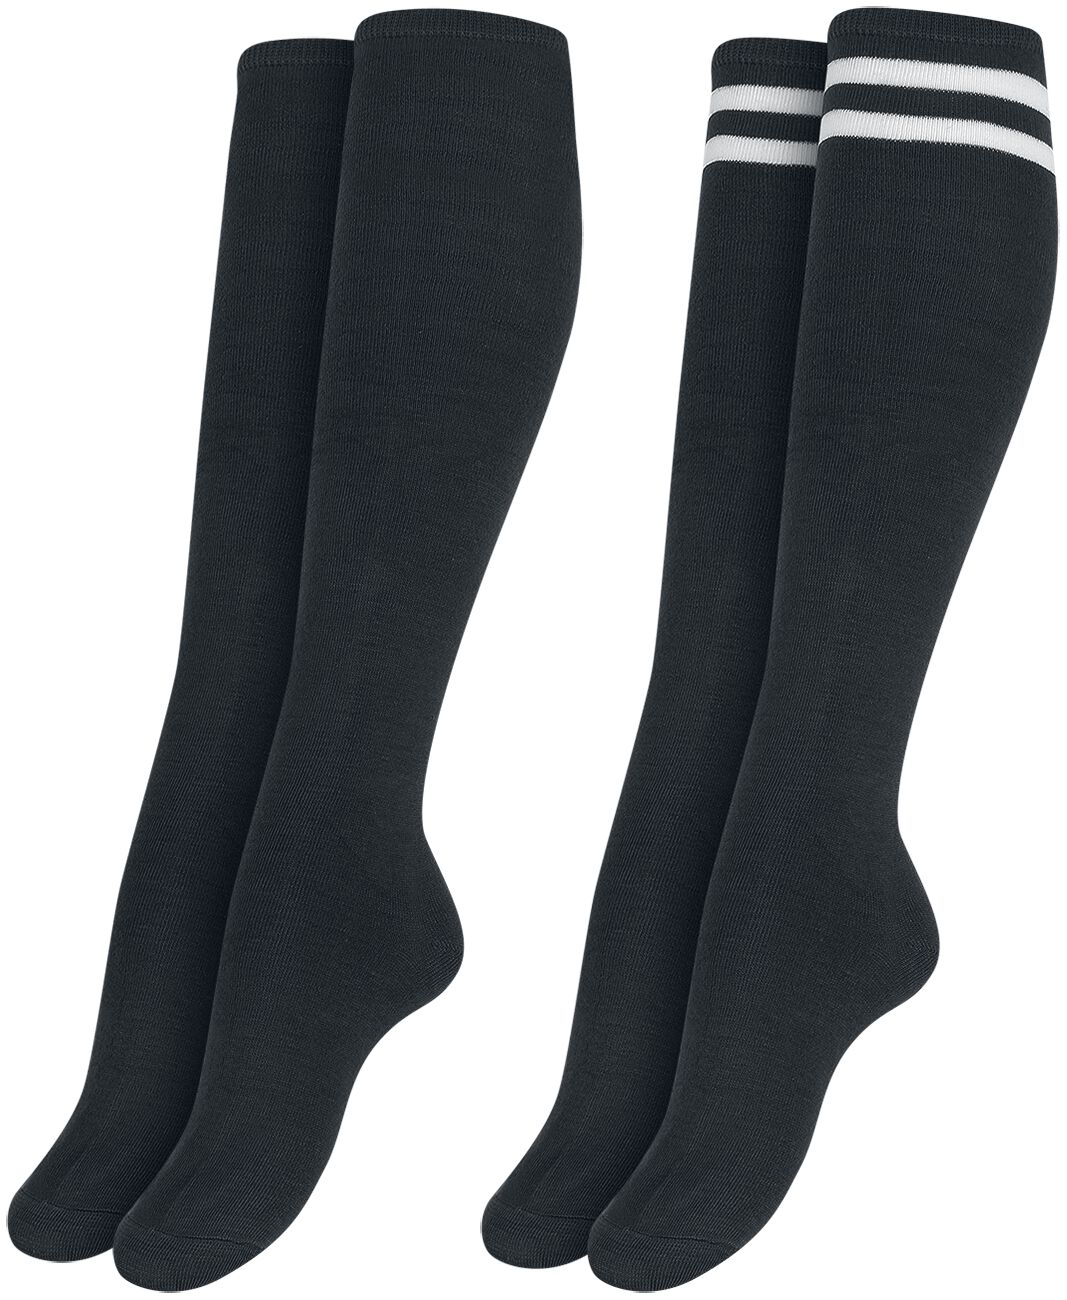 Urban Classics Kniestrümpfe - Ladies College Socks 2-Pack - EU35-38 bis EU39-42 - für Damen - Größe EU 39-42 - schwarz